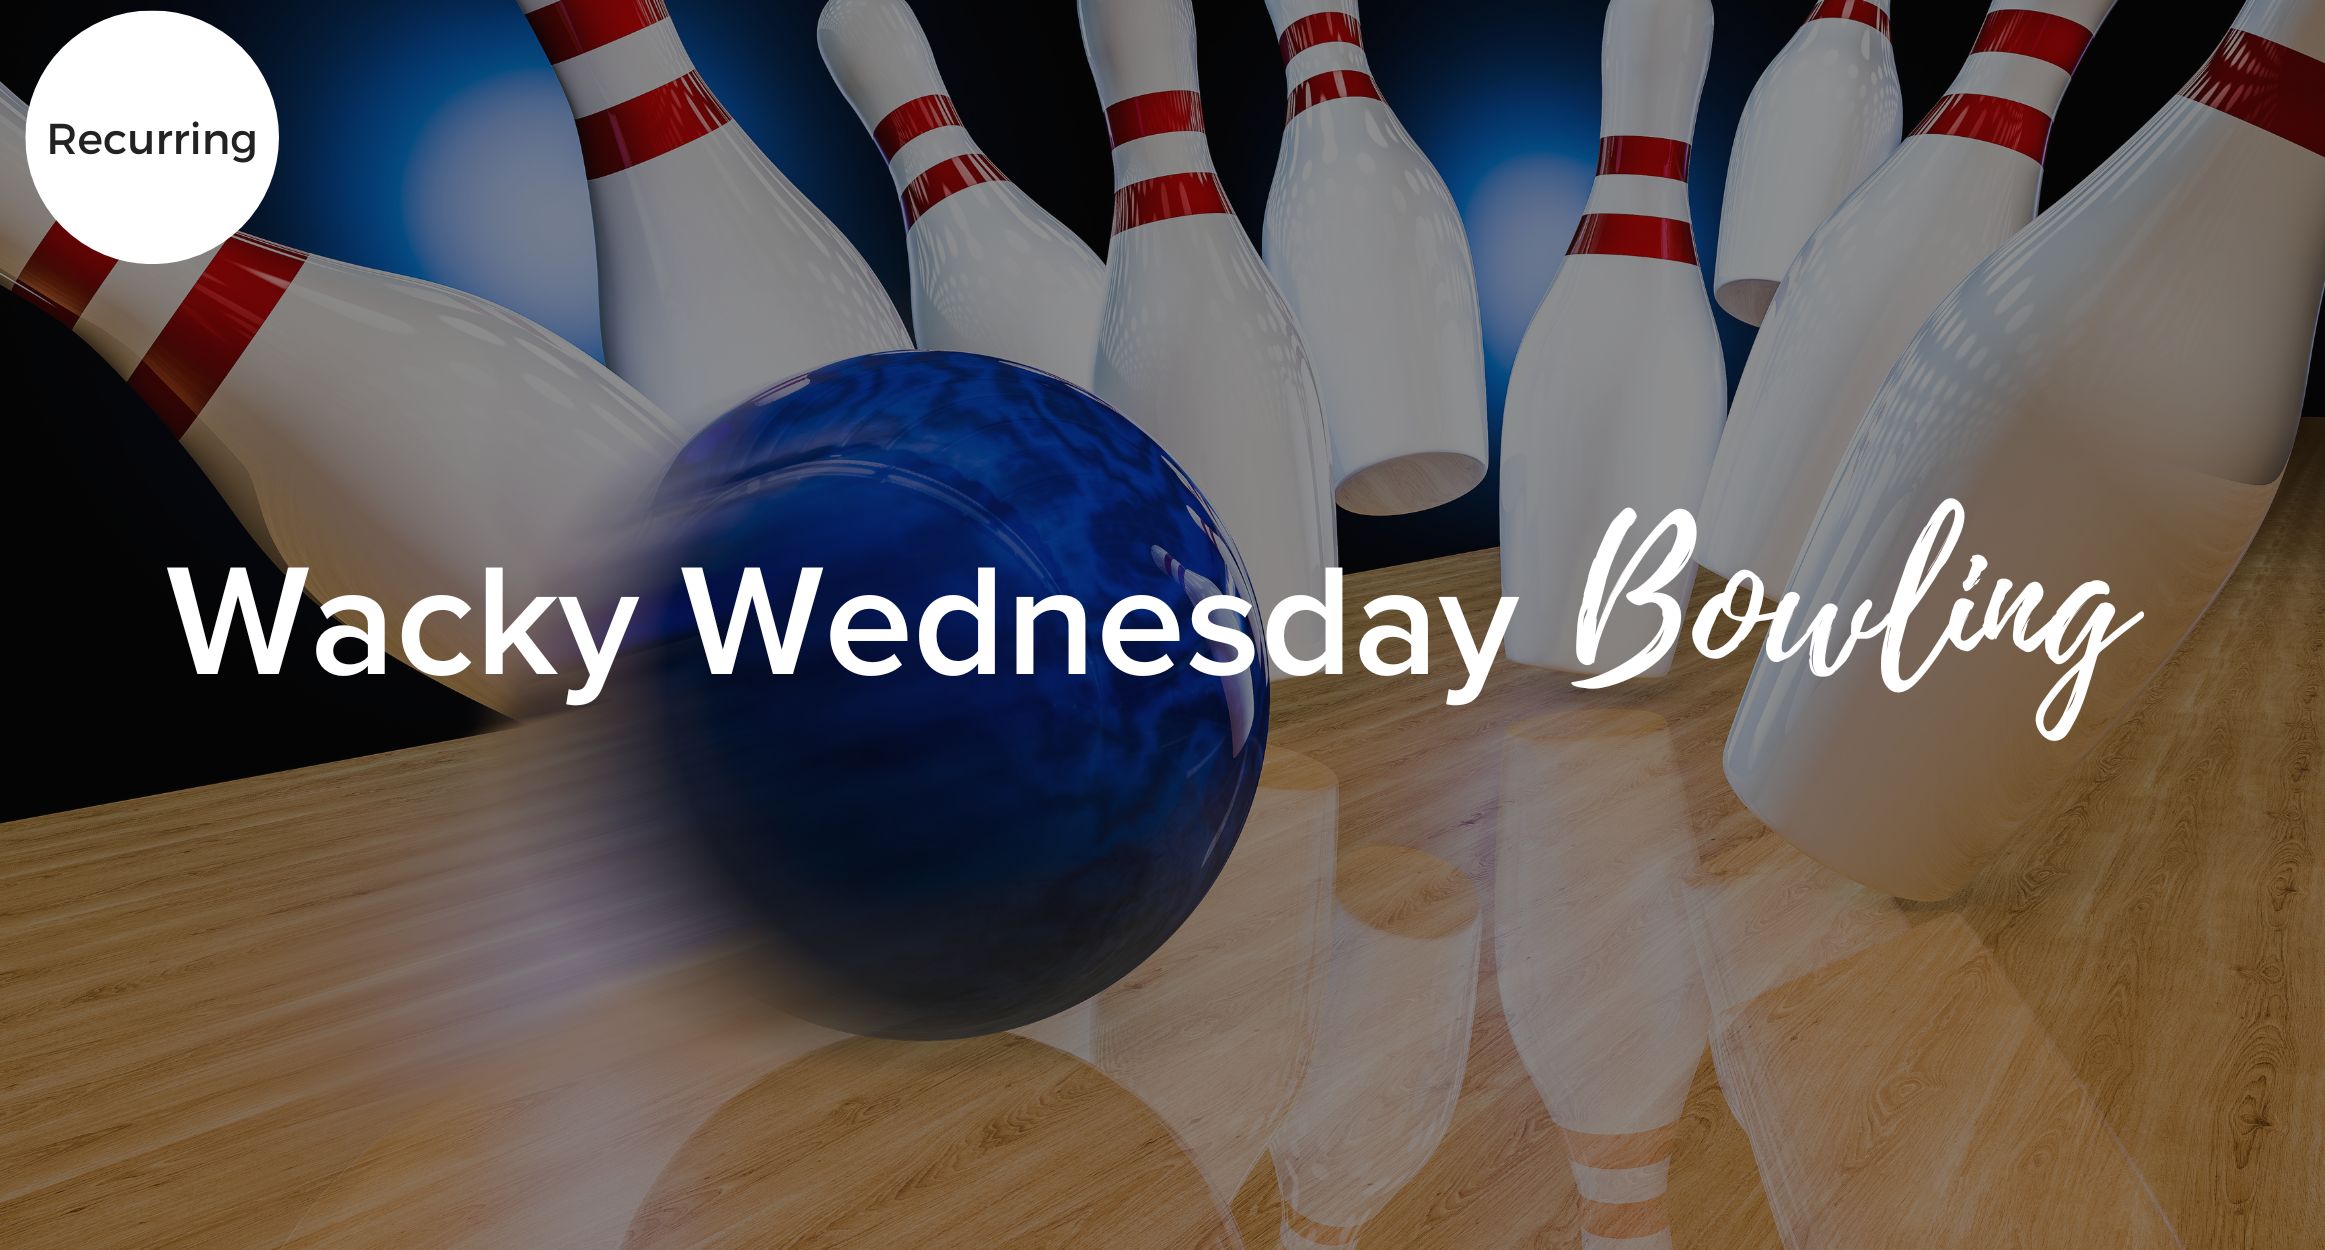 Wacky Wednesday Bowling